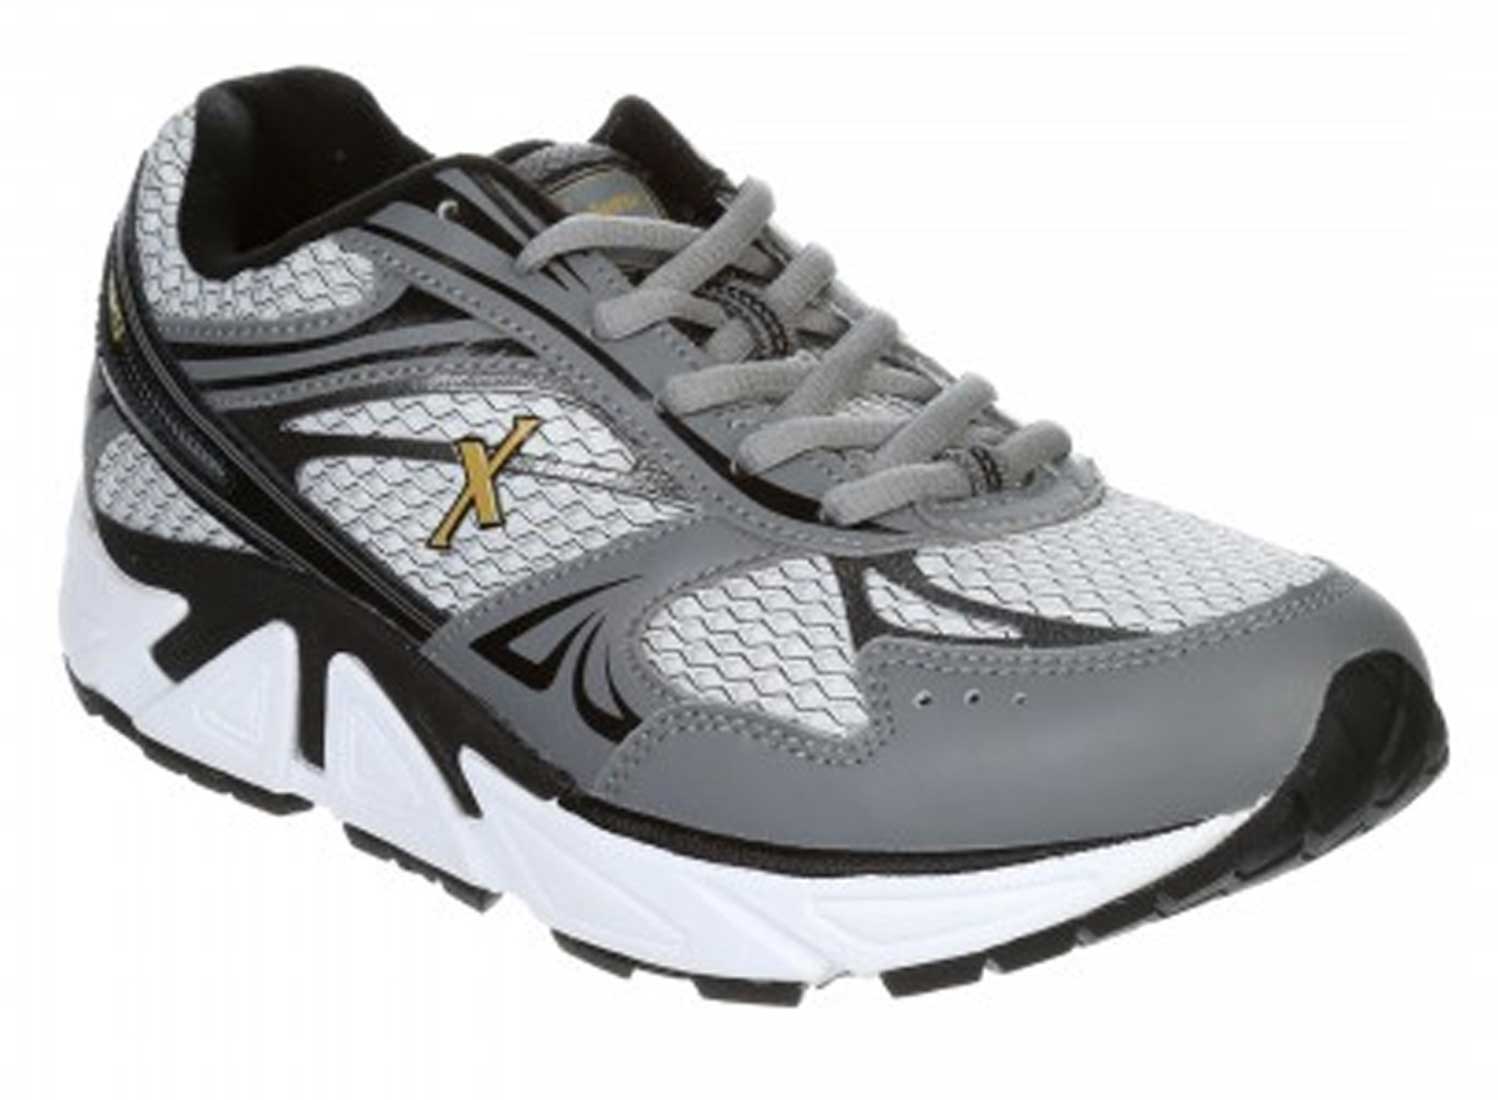 Xelero Shoes Genesis XPS X34630 - Men's Comfort Orthopedic Diabetic Shoe - Athletic Shoe - Extra Depth For Orthotics